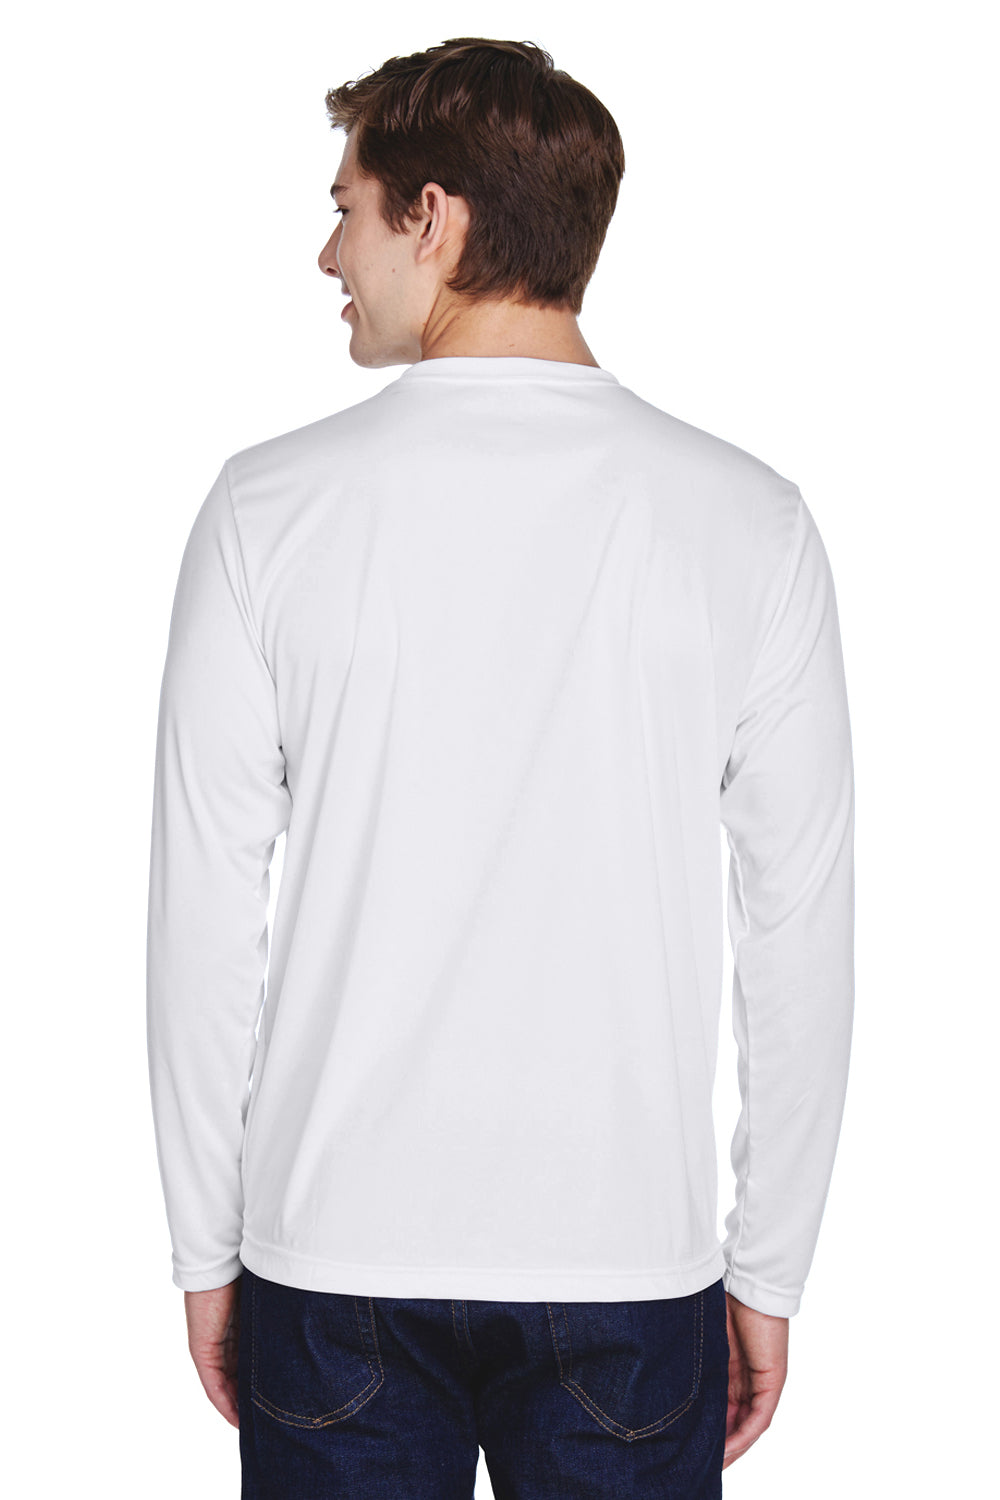 Team 365 TT11L Mens Zone Performance Moisture Wicking Long Sleeve Crewneck T-Shirt White Back